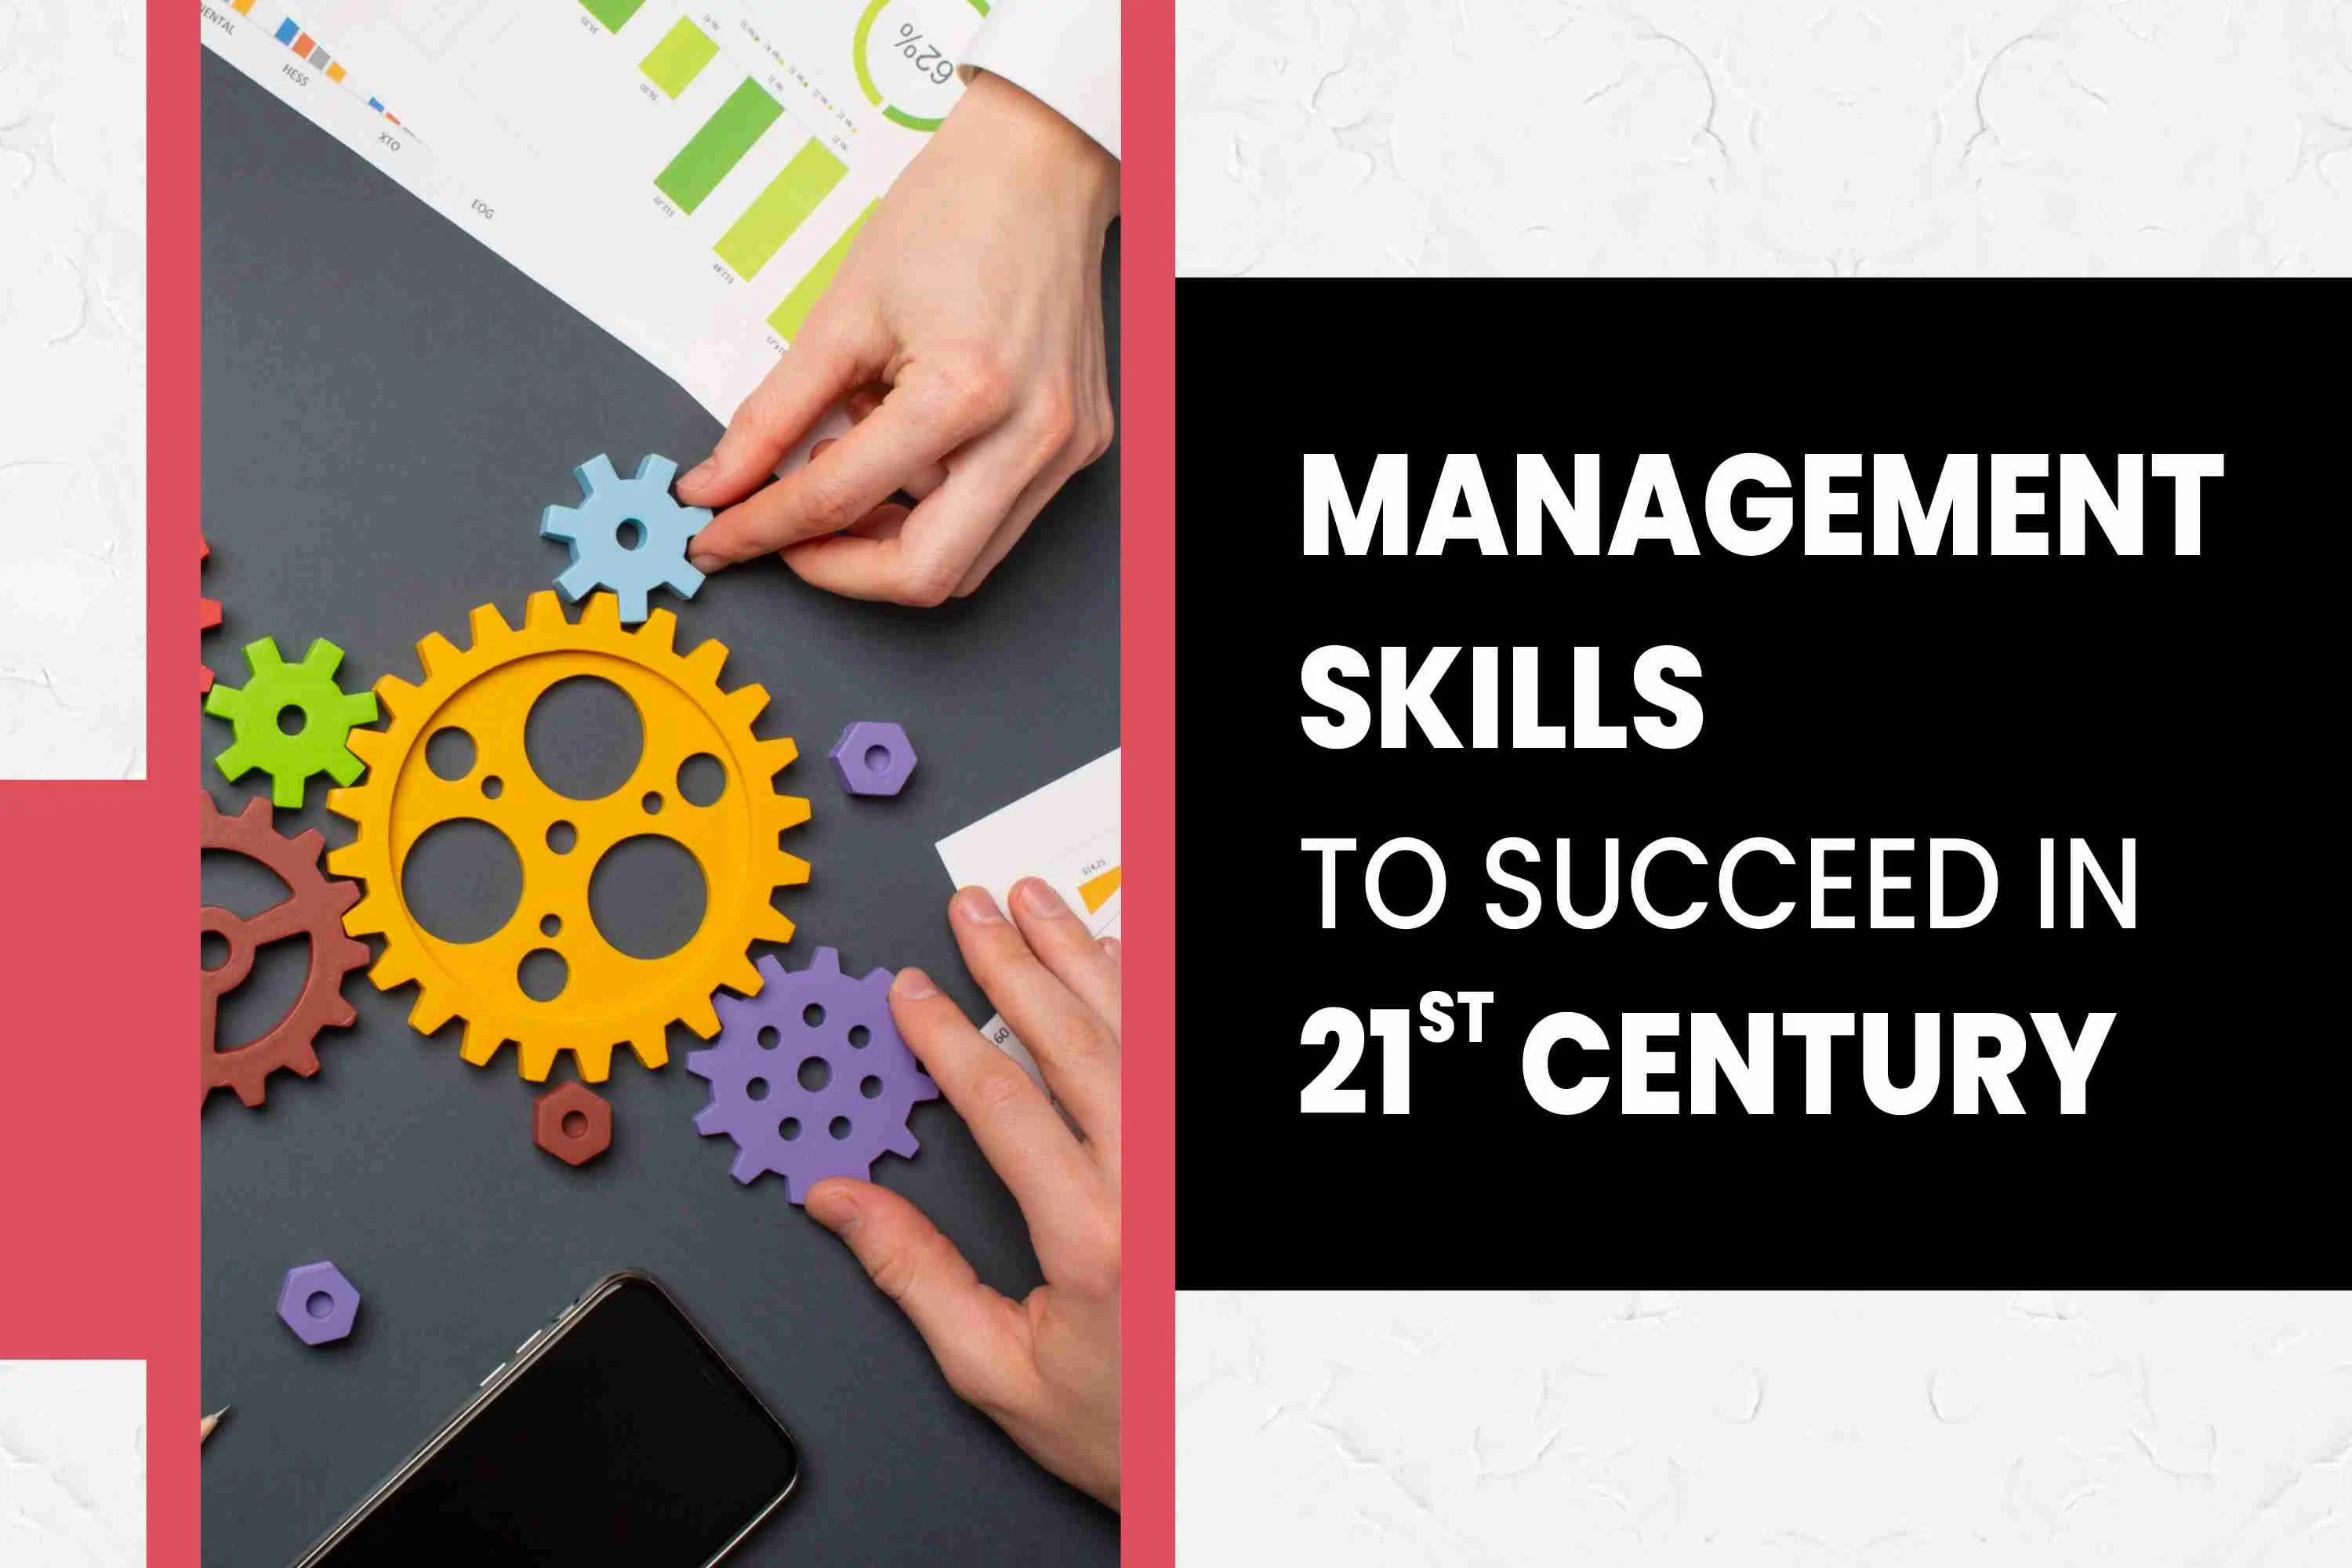 Management Skills In 21st century